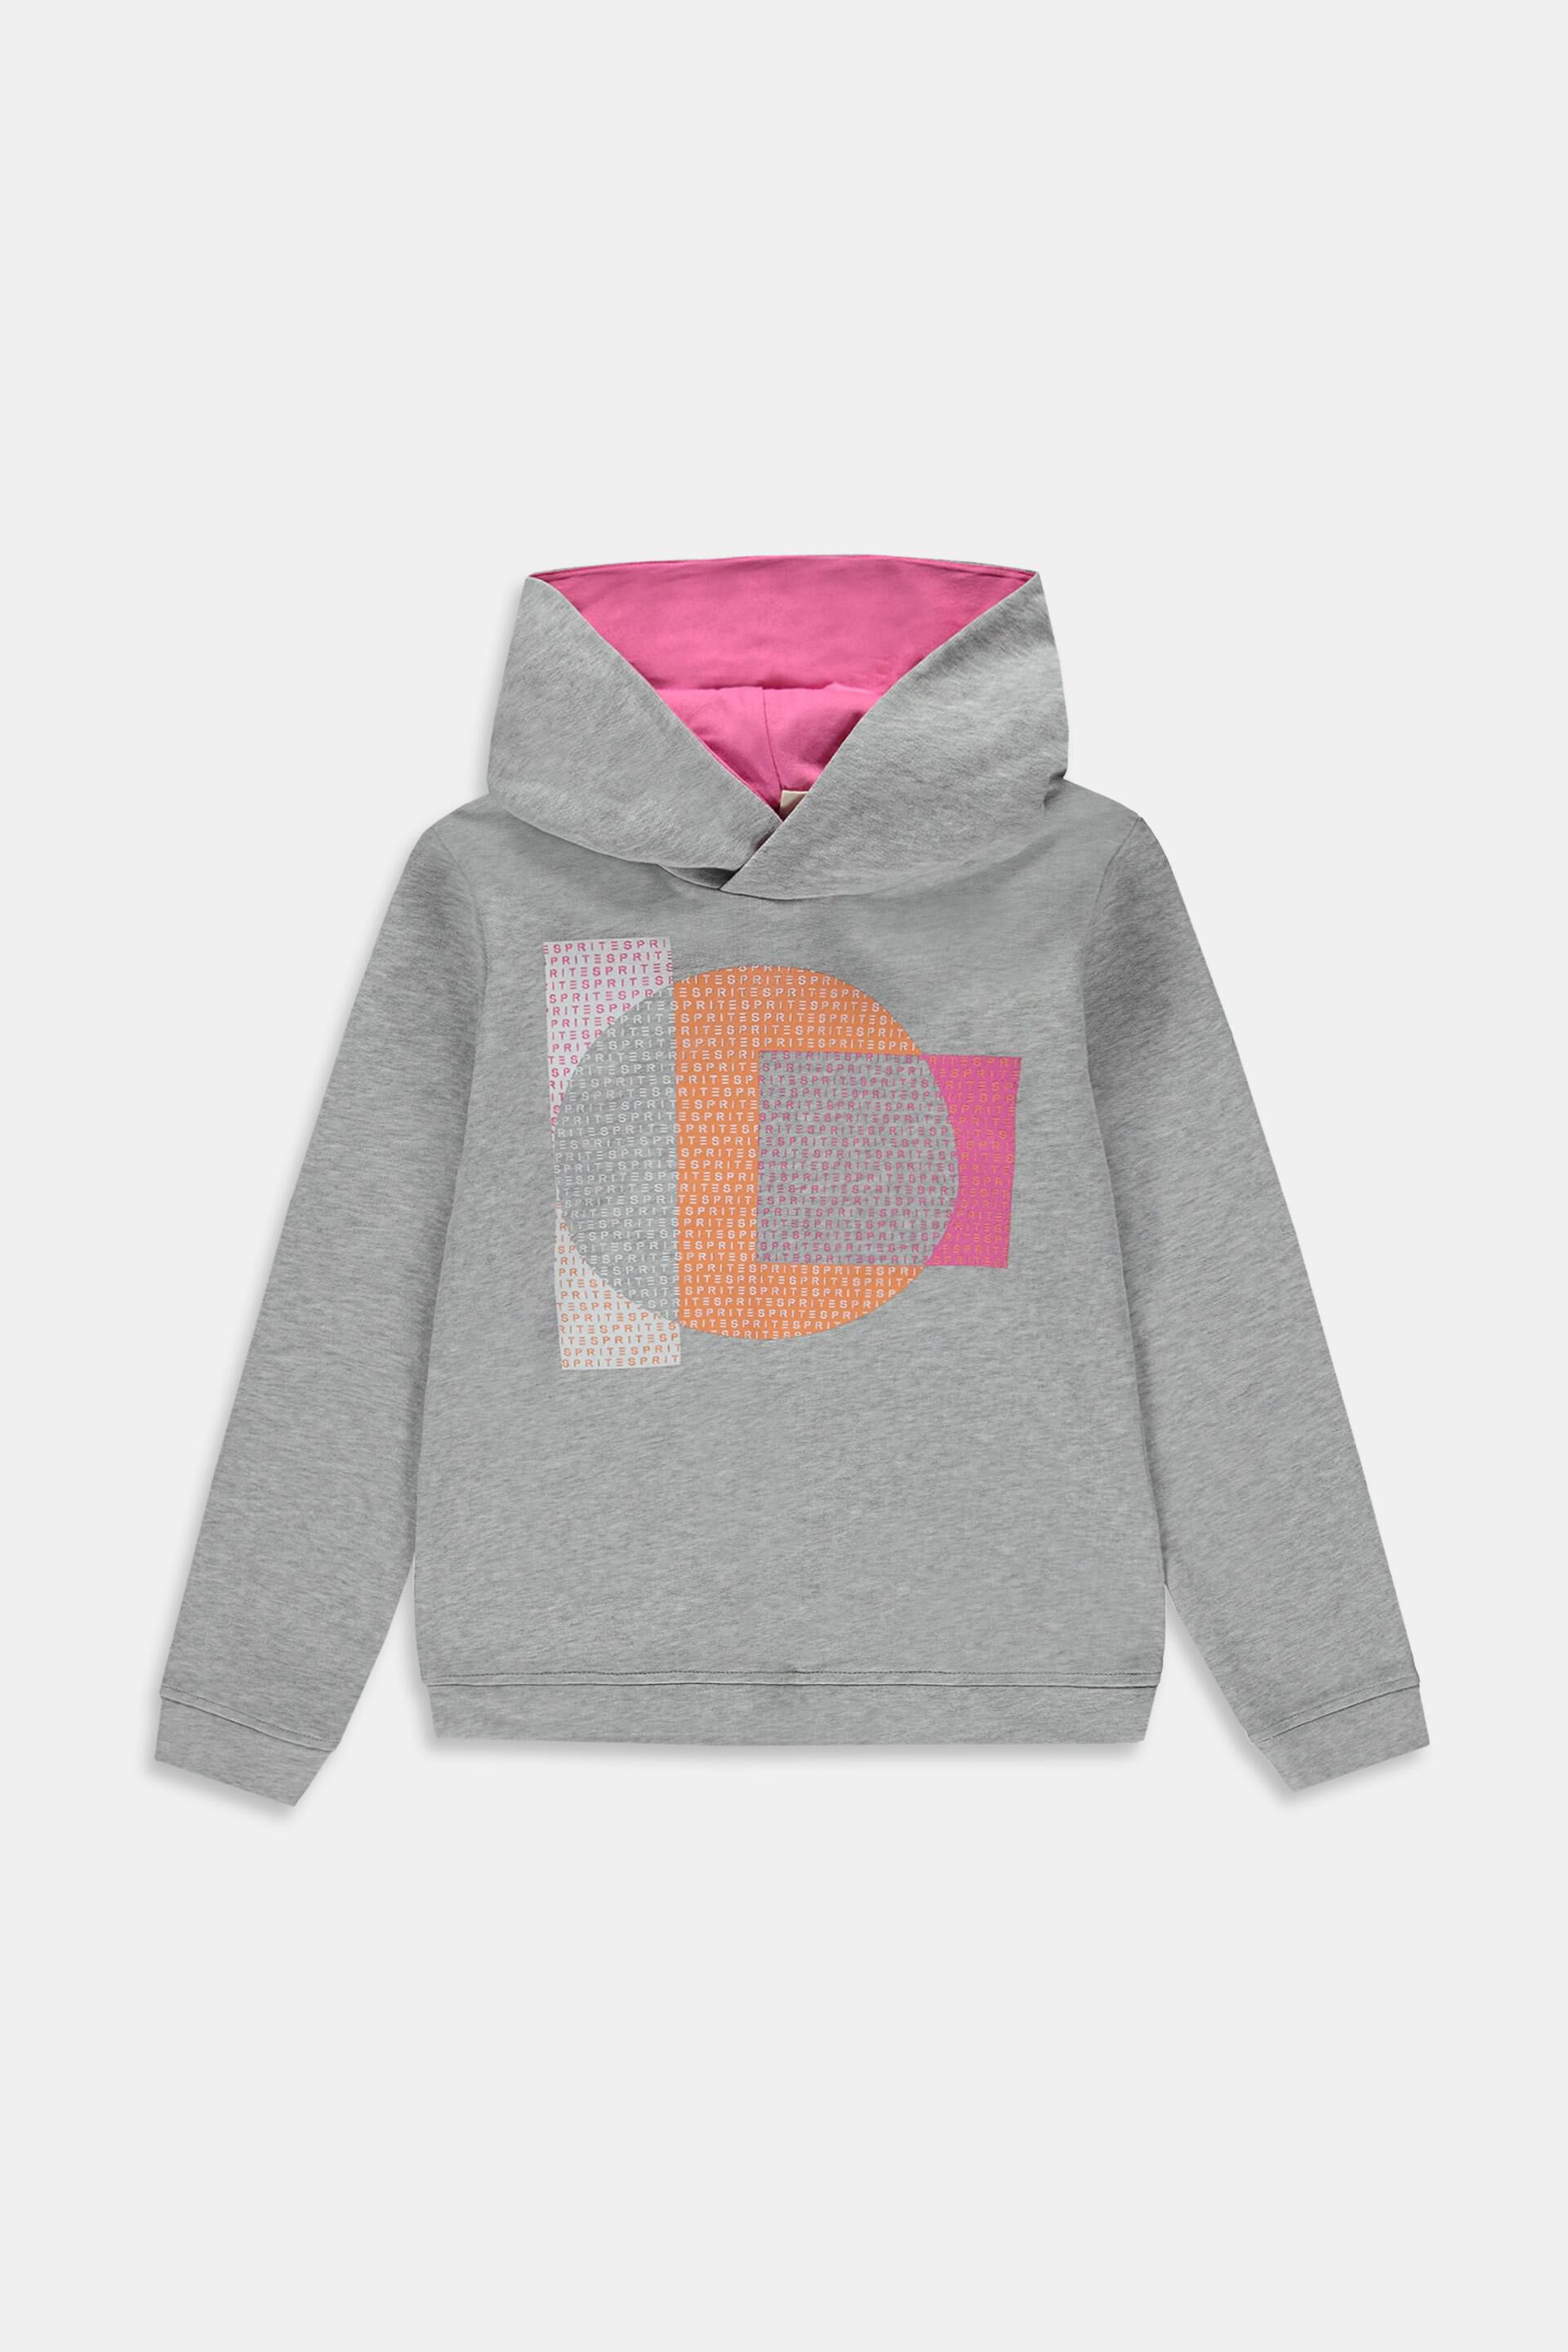 Esprit geo on chest Cotton hoodie print with